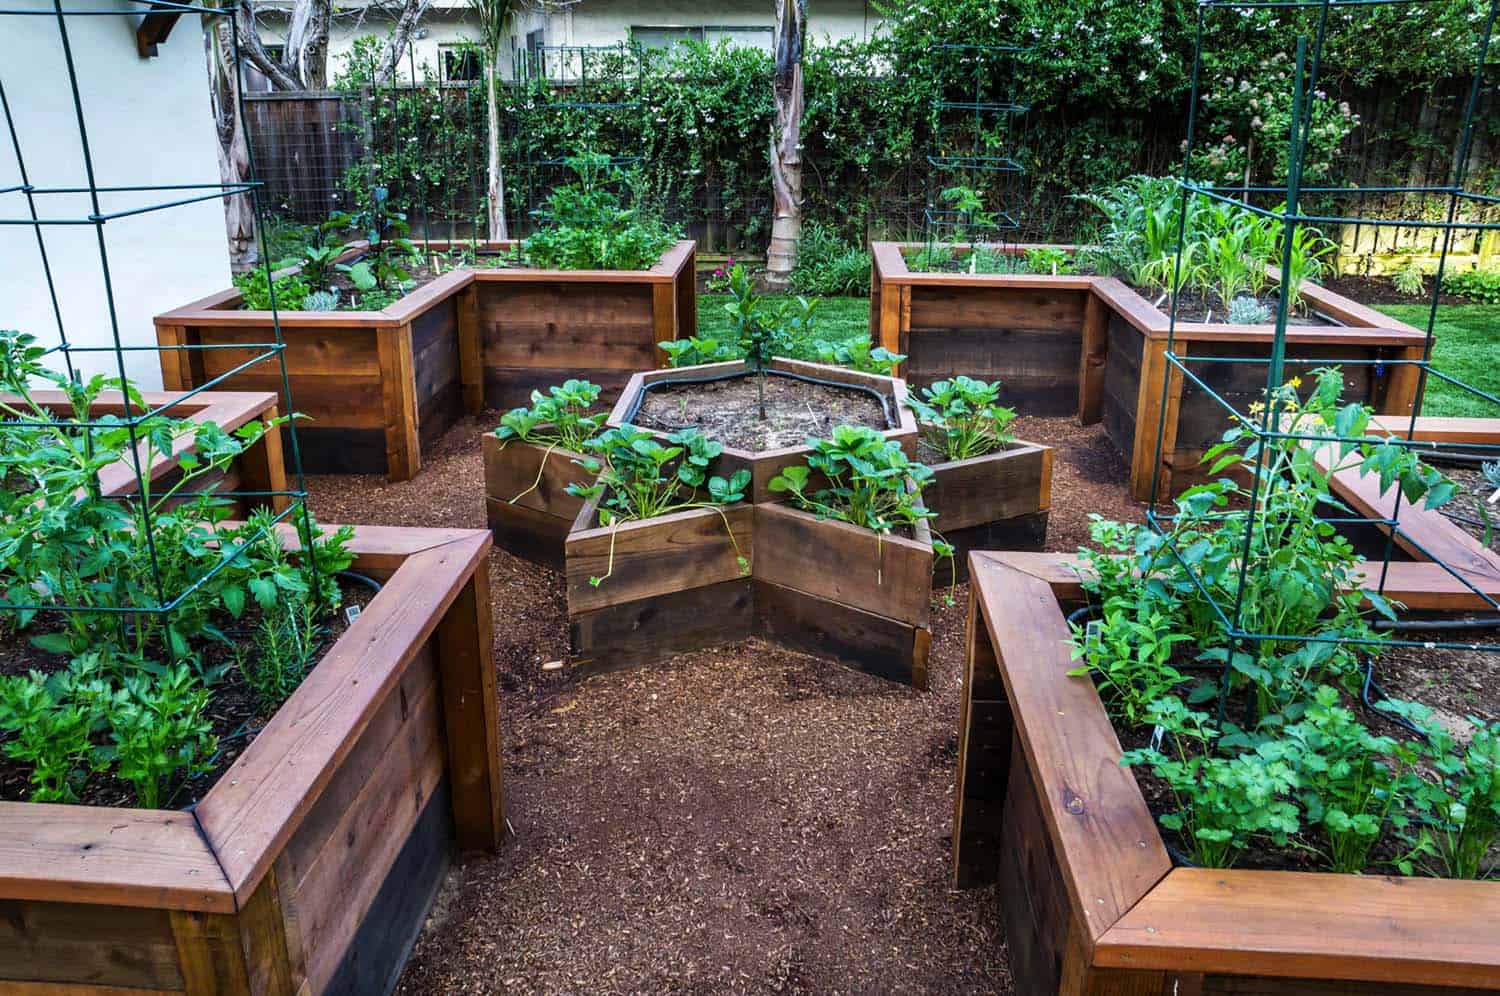 20+ Creative and Inspiring Raised Bed Vegetable Garden Ideas